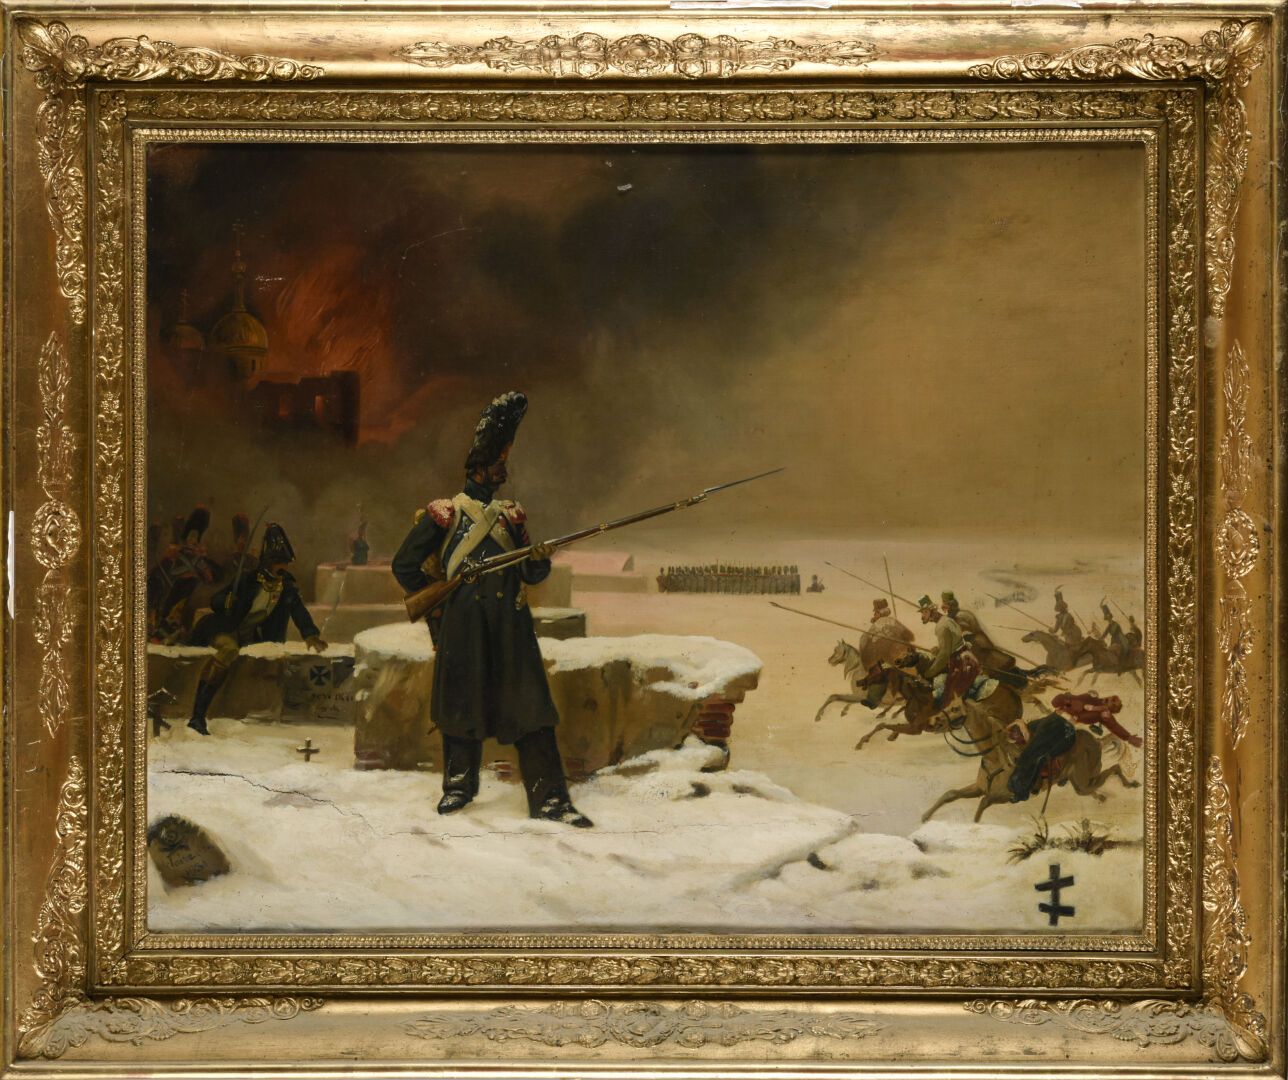 Null Claire BRO
莫斯科之战
布面油画
签名和日期为1831年
62 x 81 cm 
(事故和修复)